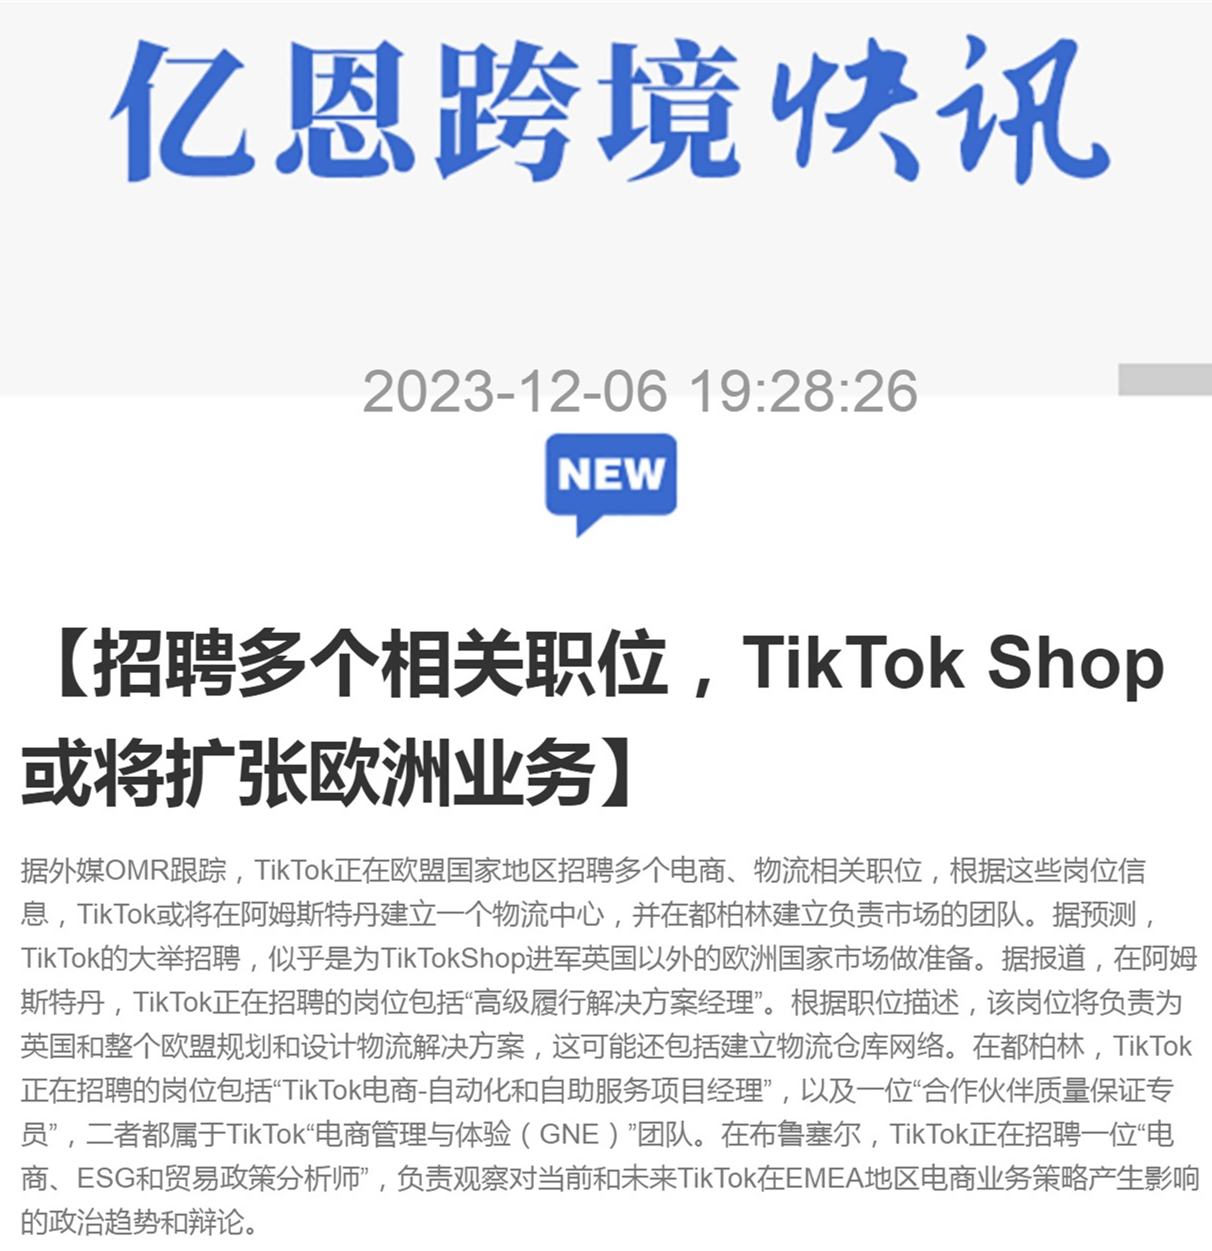 TikTok在欧盟地区招聘多个电商、物流相关职位